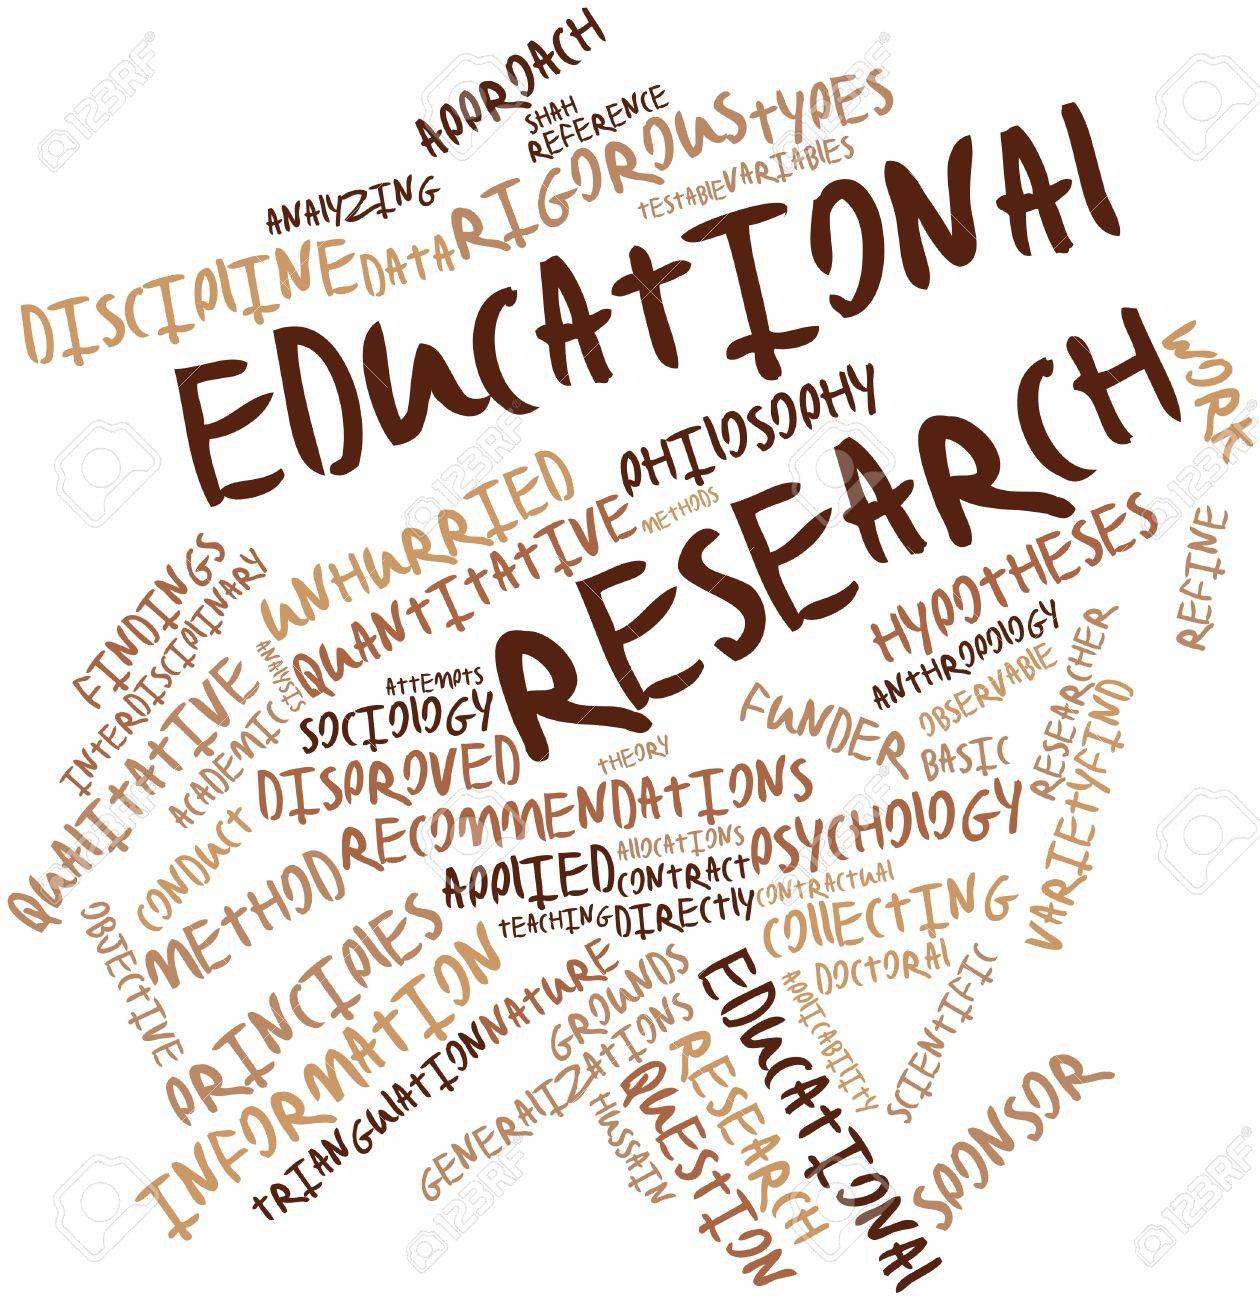 research & reviews journal of educational studies